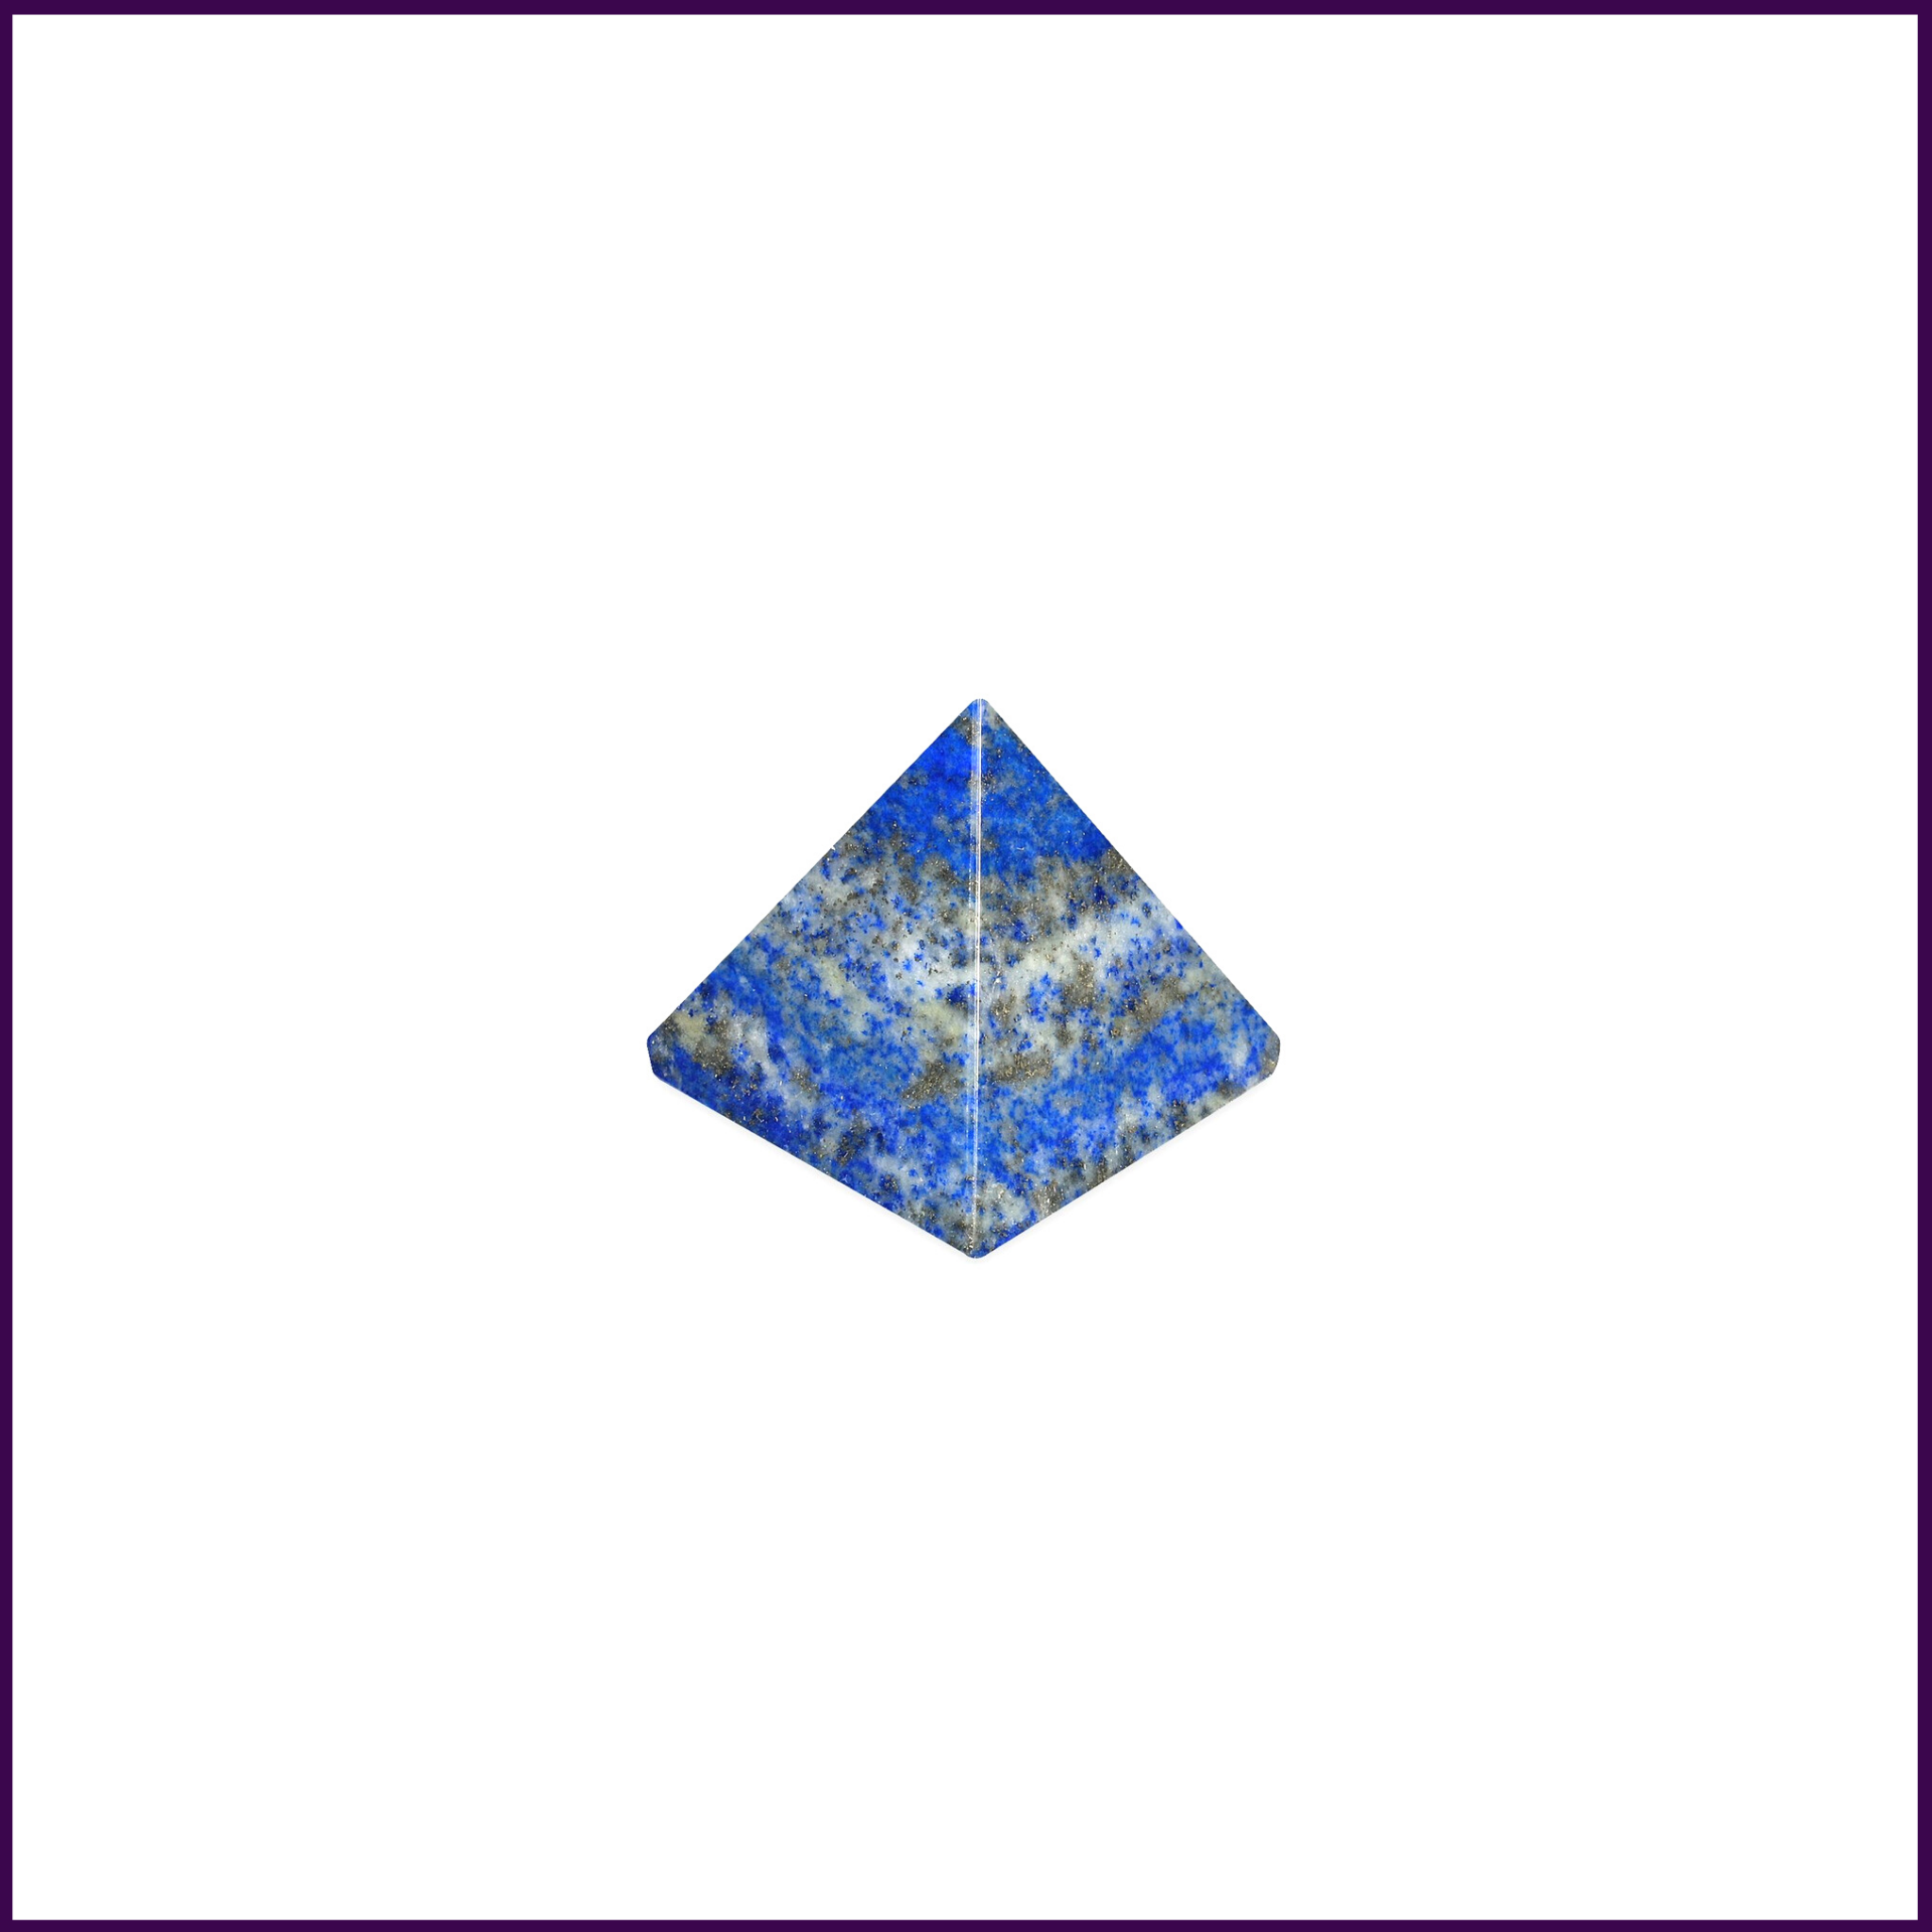 Lapis Lazuli Crystal Pyramid (Portable - 10mm) To Establish Connections with Spirit Guardians - 51pyramids